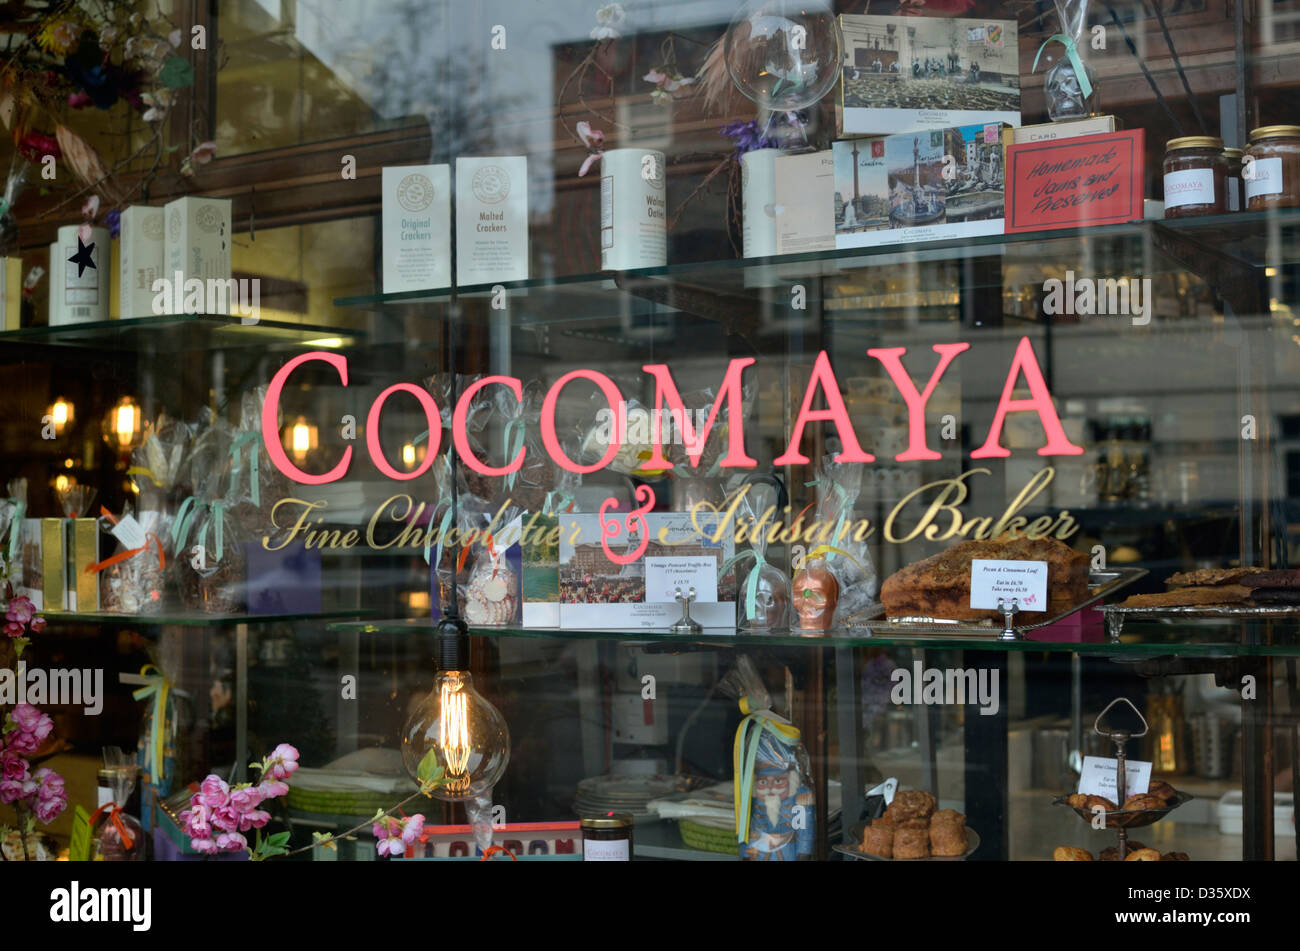 Fine Chocolatier Cocomaya et artisan boulanger à Brompton Road, Knightsbridge, London, UK Banque D'Images